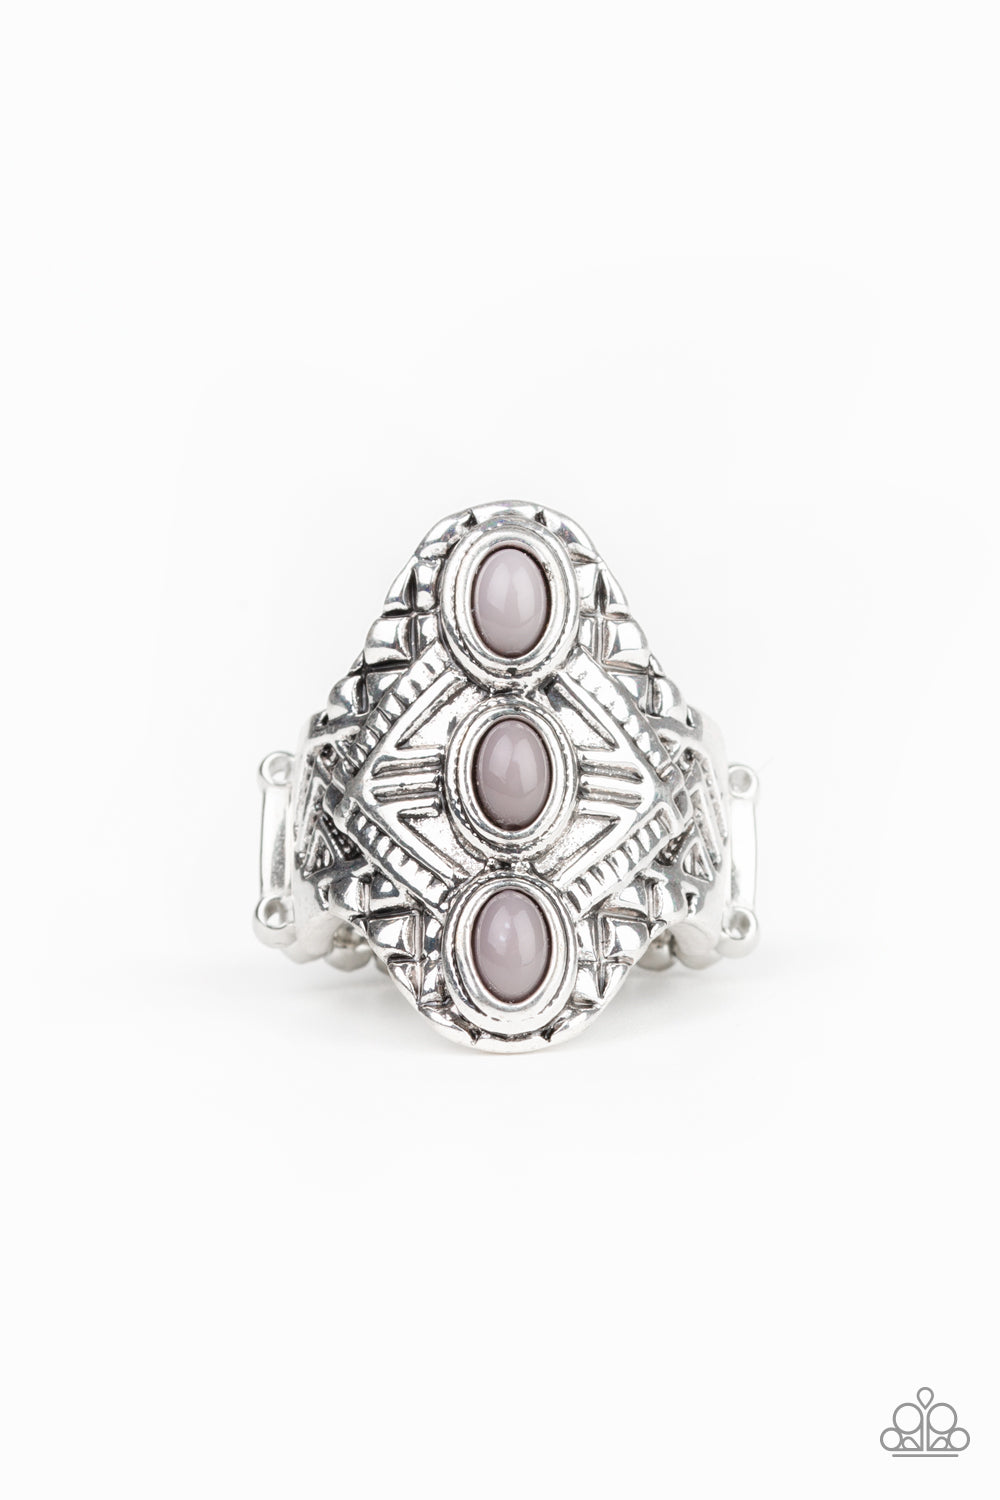 Mayan Motif Silver Paparazzi Ring Cashmere Pink Jewels - Cashmere Pink Jewels & Accessories, Cashmere Pink Jewels & Accessories - Paparazzi